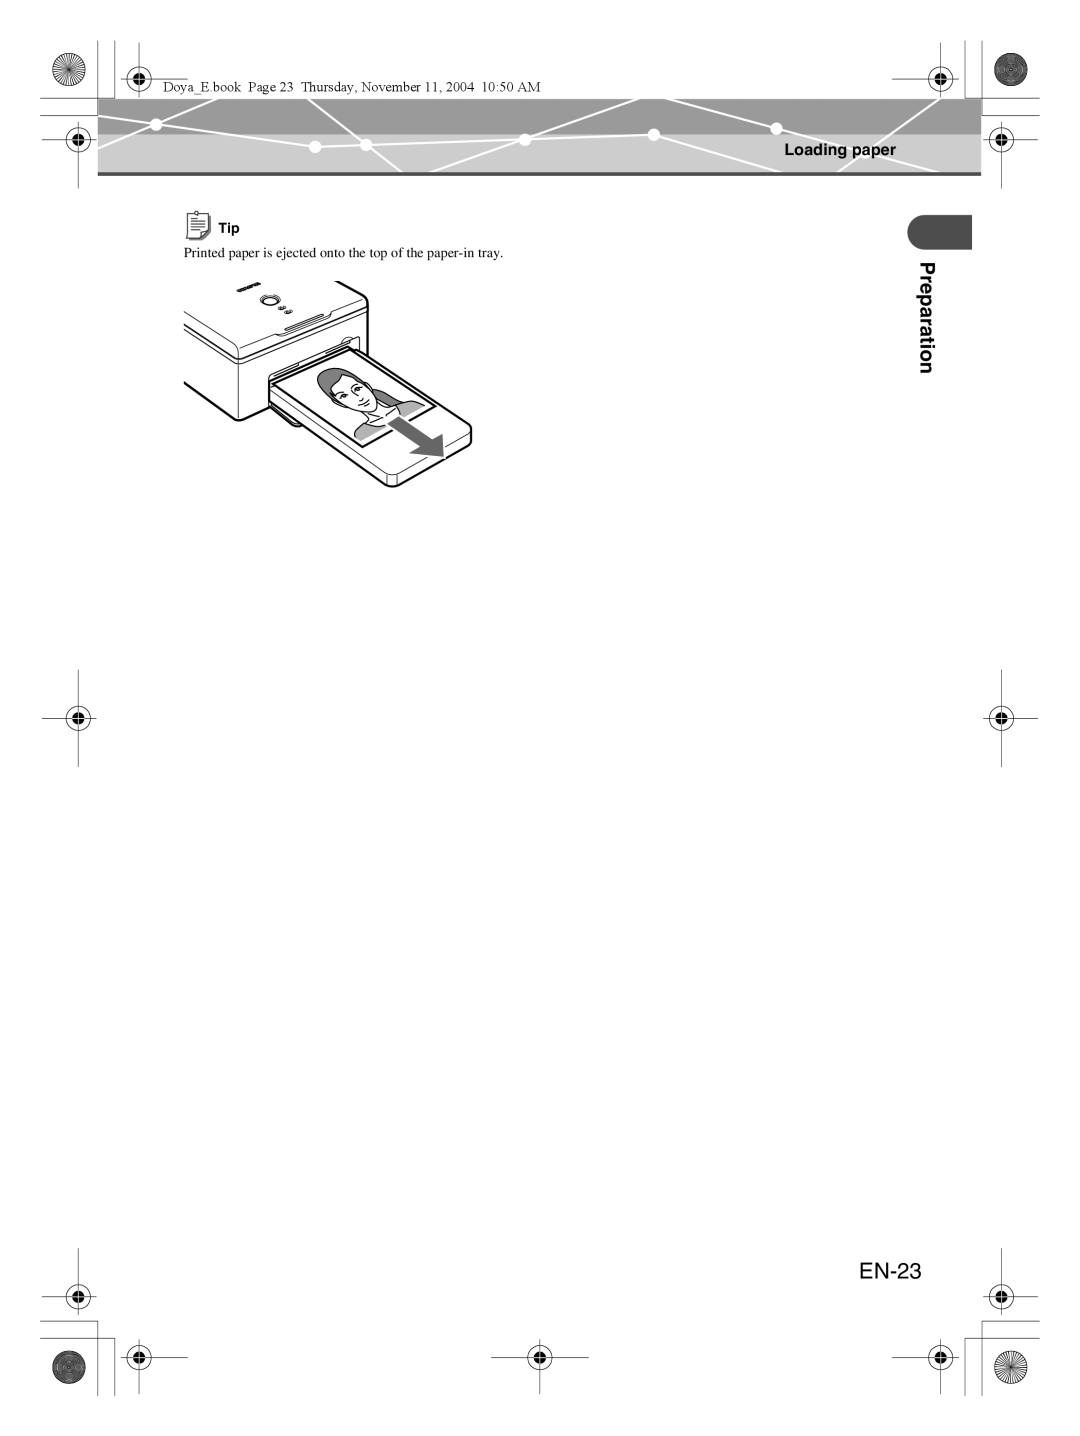 Olympus P-S100 user manual EN-23, Preparation, Loading paper 